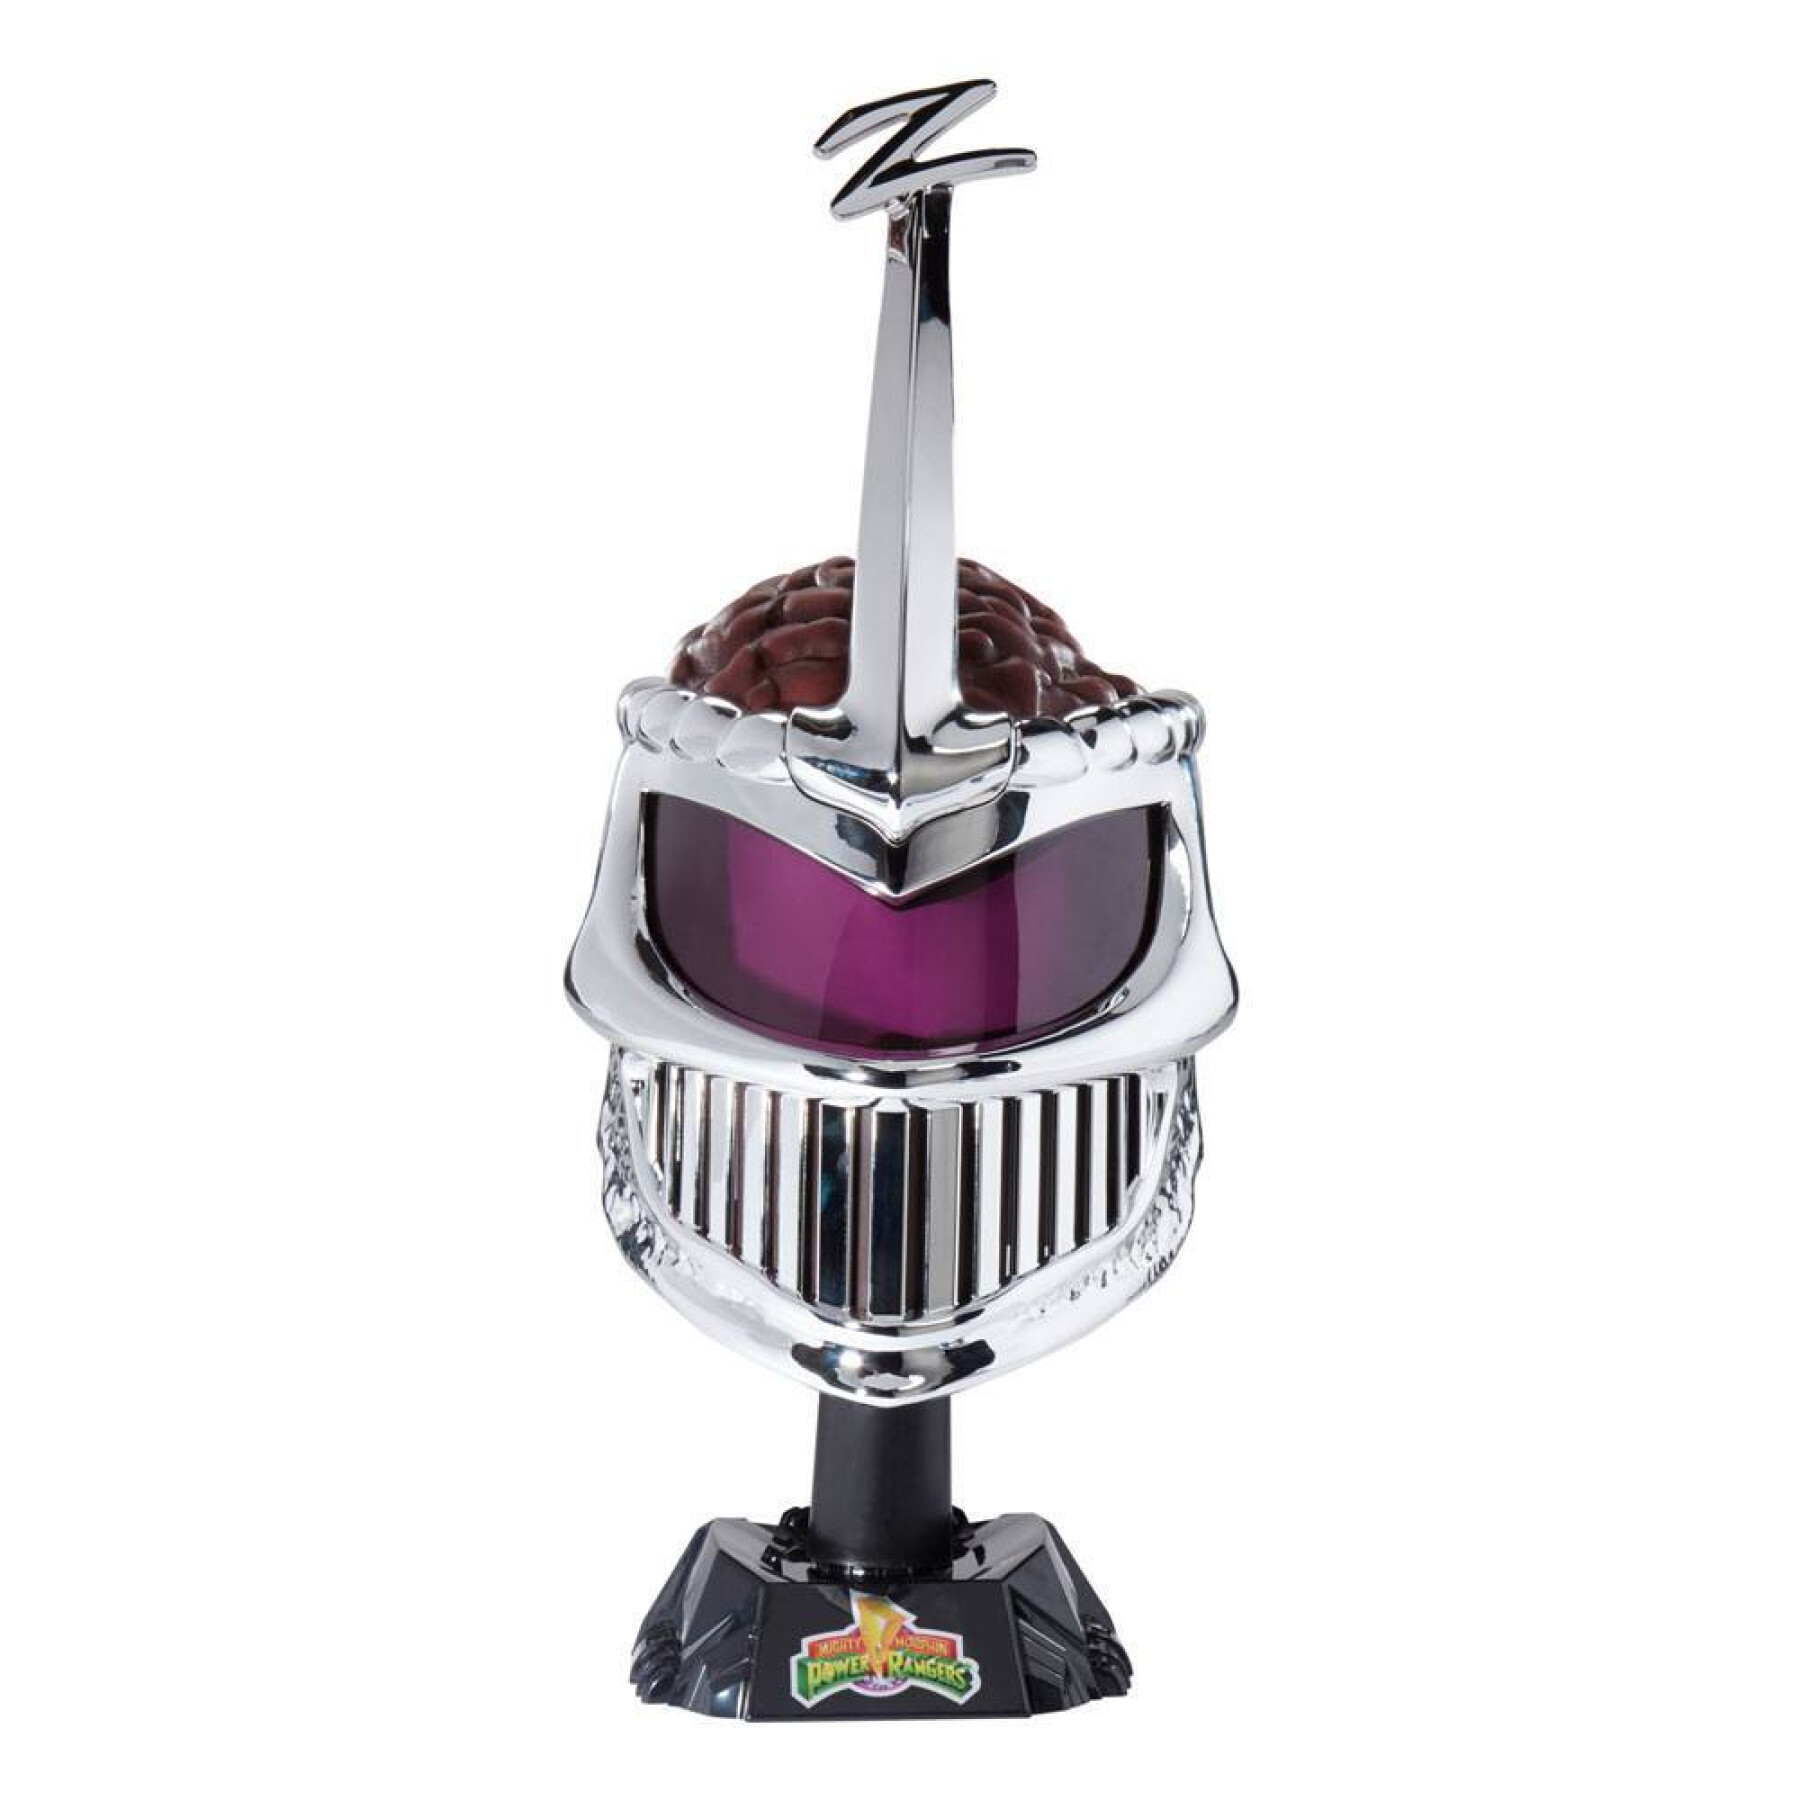 Cuffia Hasbro Mighty Morphin Power Rangers Lightning Collection modulateur vocal de Lord Zedd